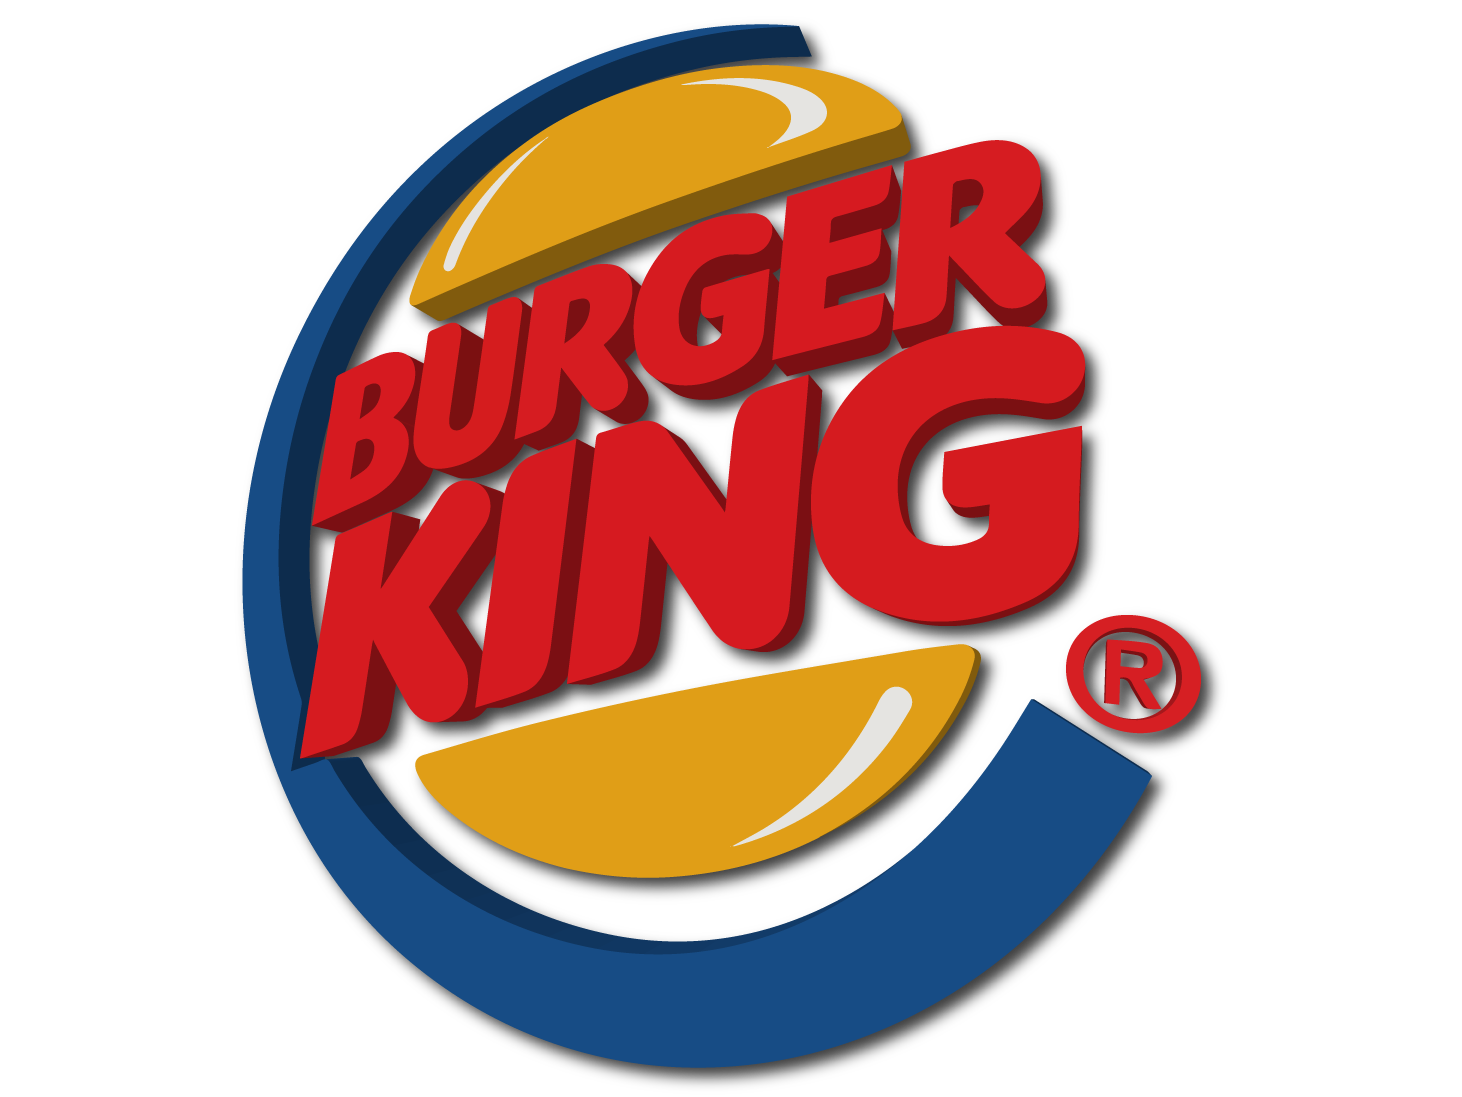 History Of The Burger King Lo